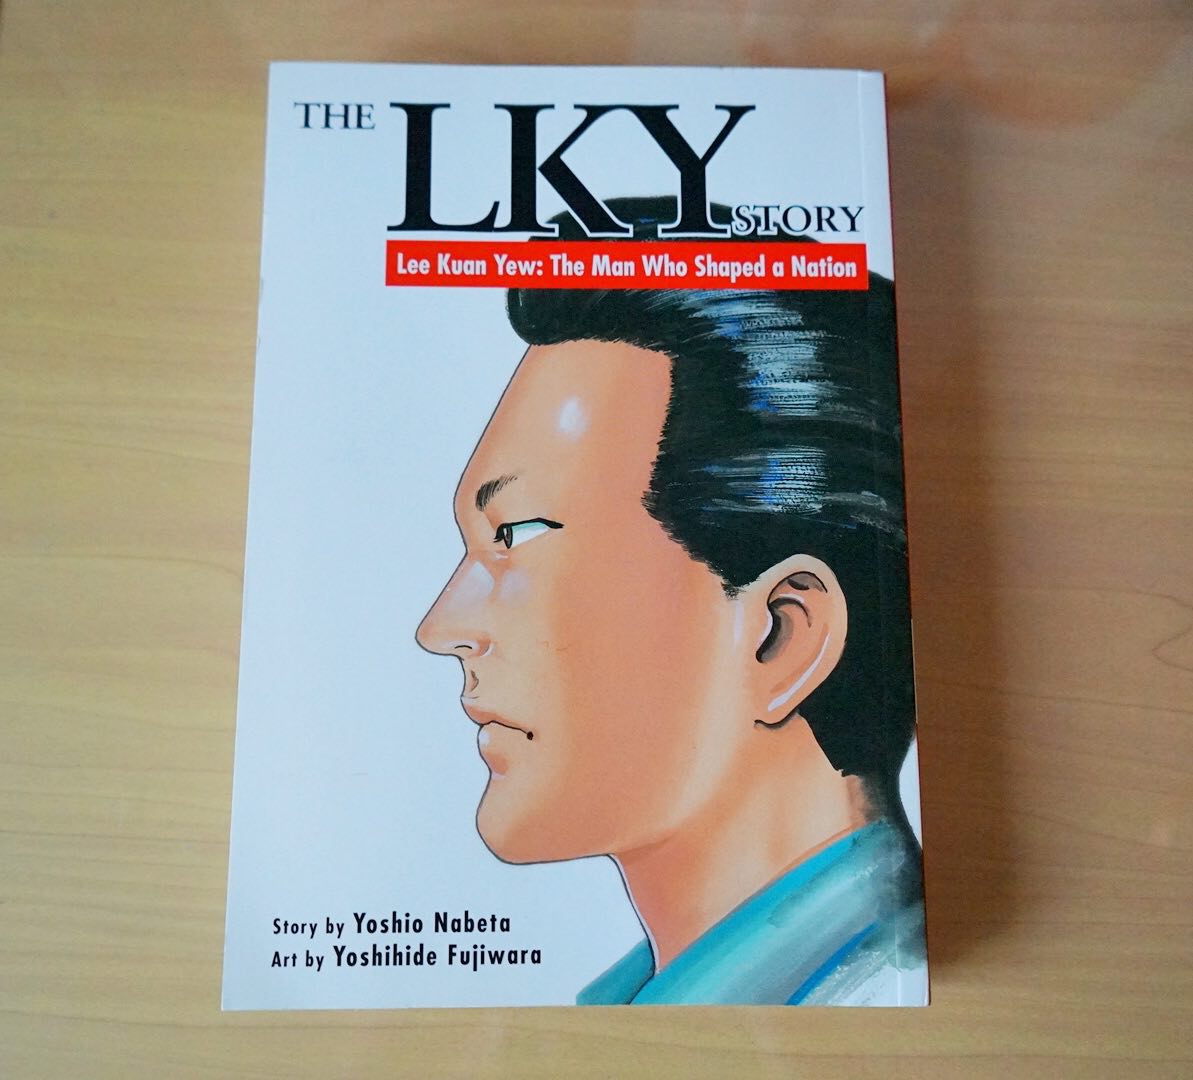 the-lky-story-cover-aspirantsg